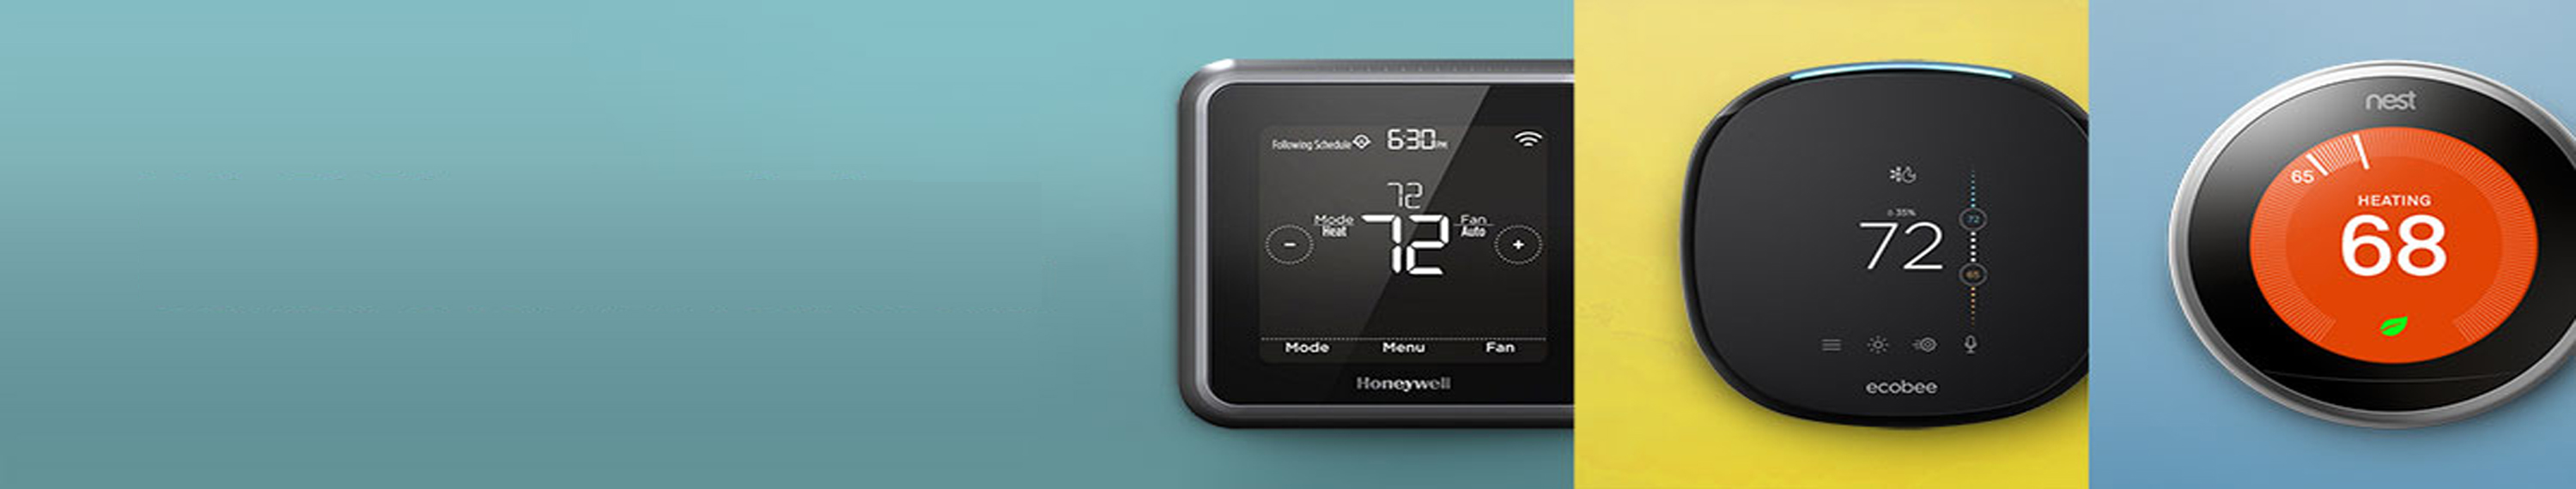 Smart-Thermostats-Start_Banner